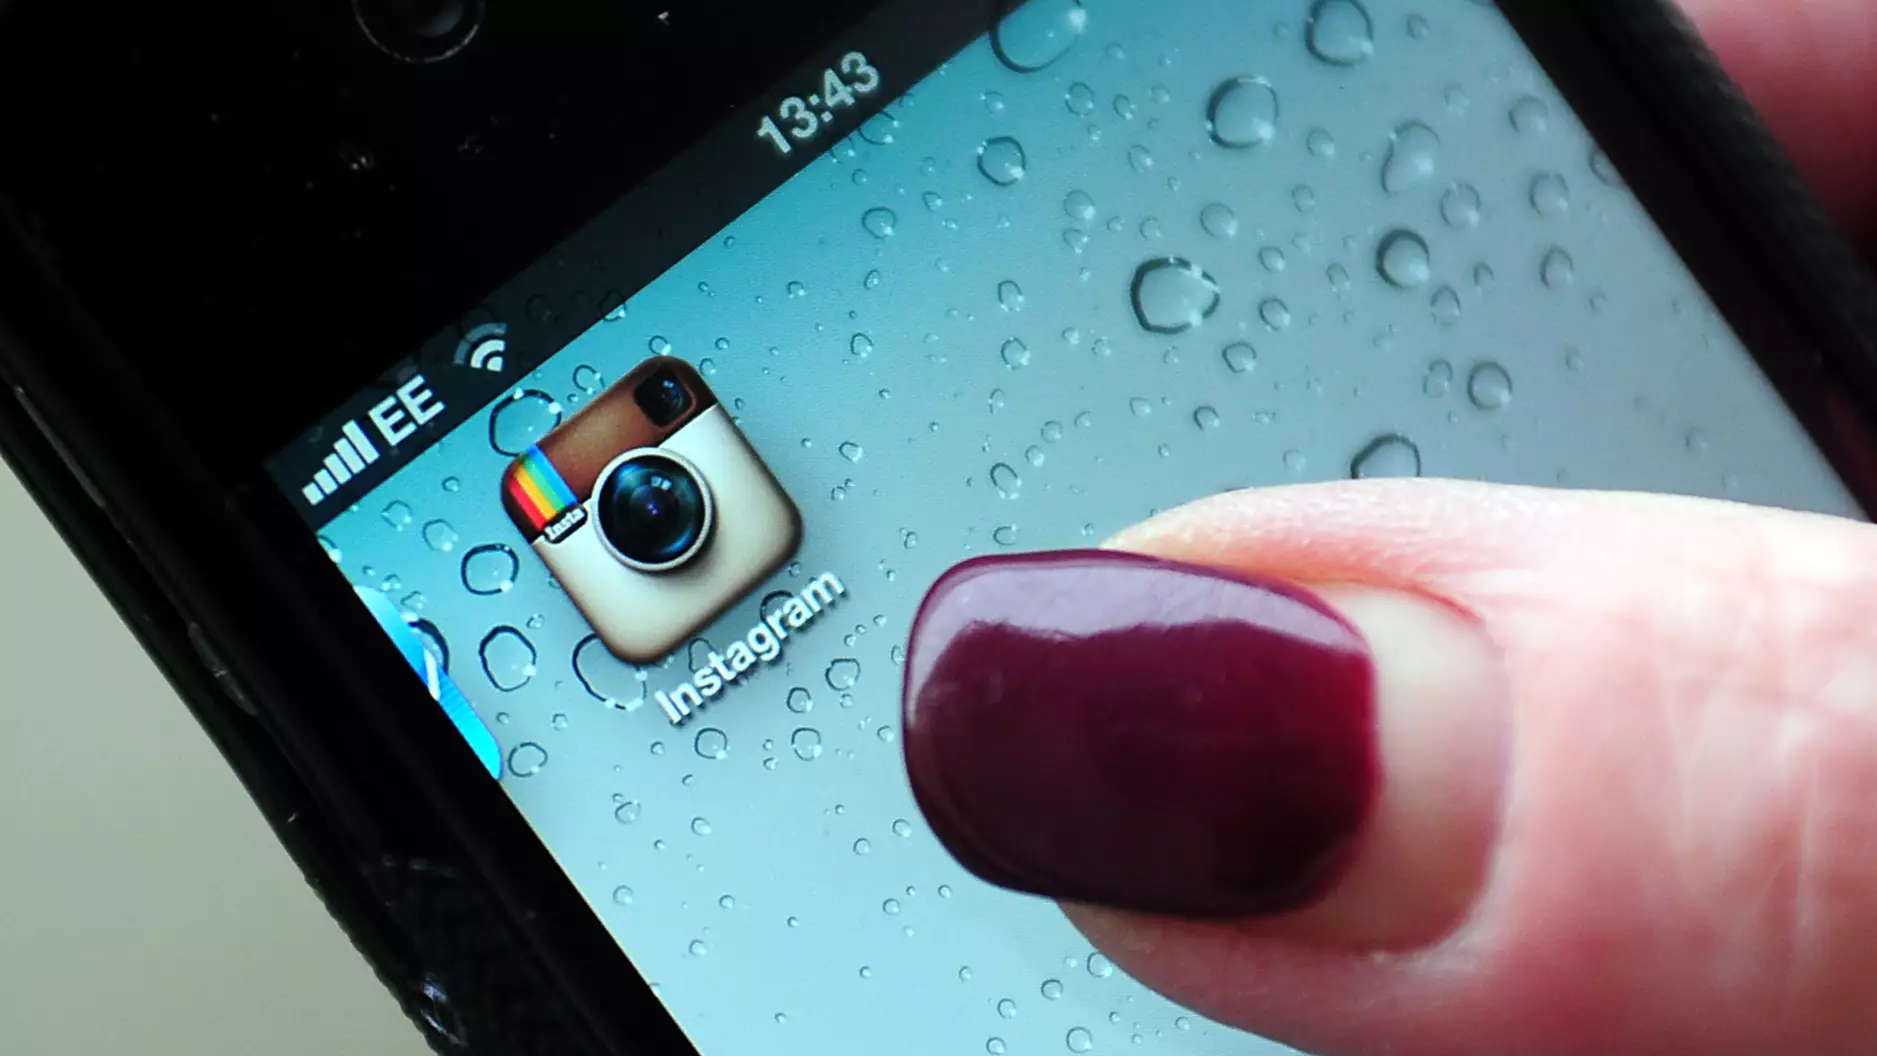 Instagram Brings Back Retro App Icons To Mark 10th Birthday 